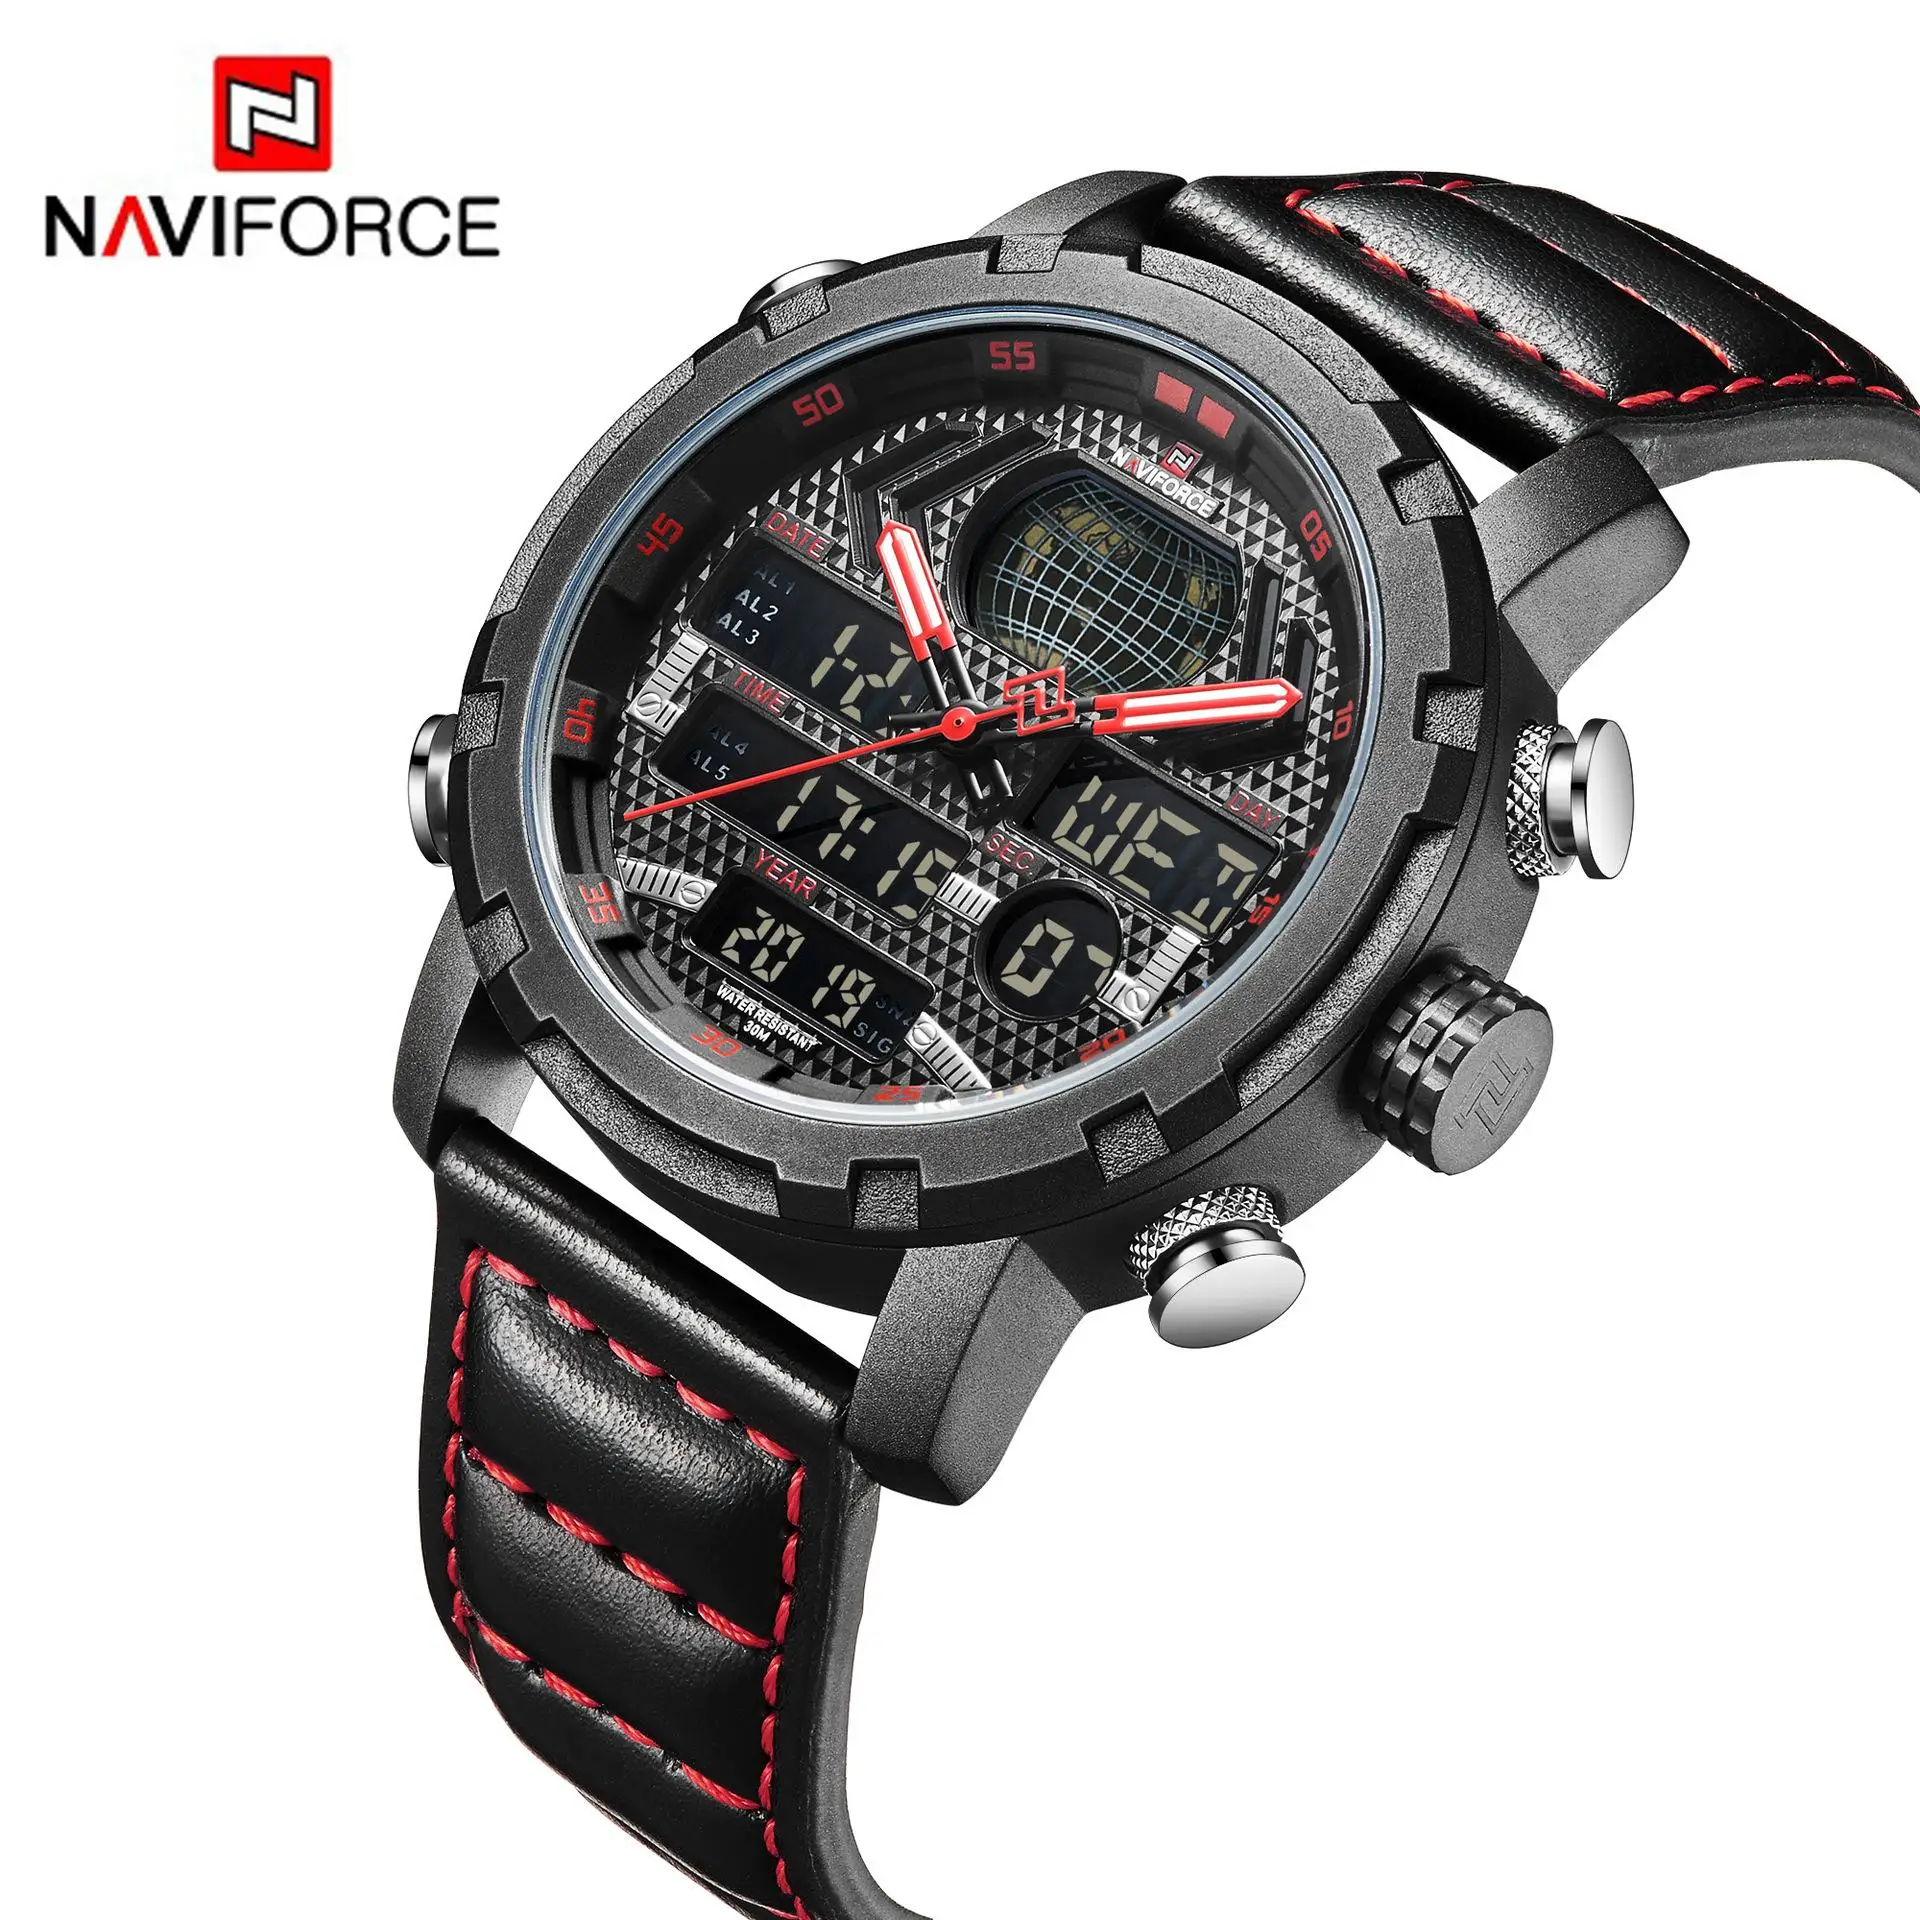 

Naviforce NF9160 Luxury watches wrist men leather belt quartz sport dual display calendar chronograph watches relogio masculino, 5 colors